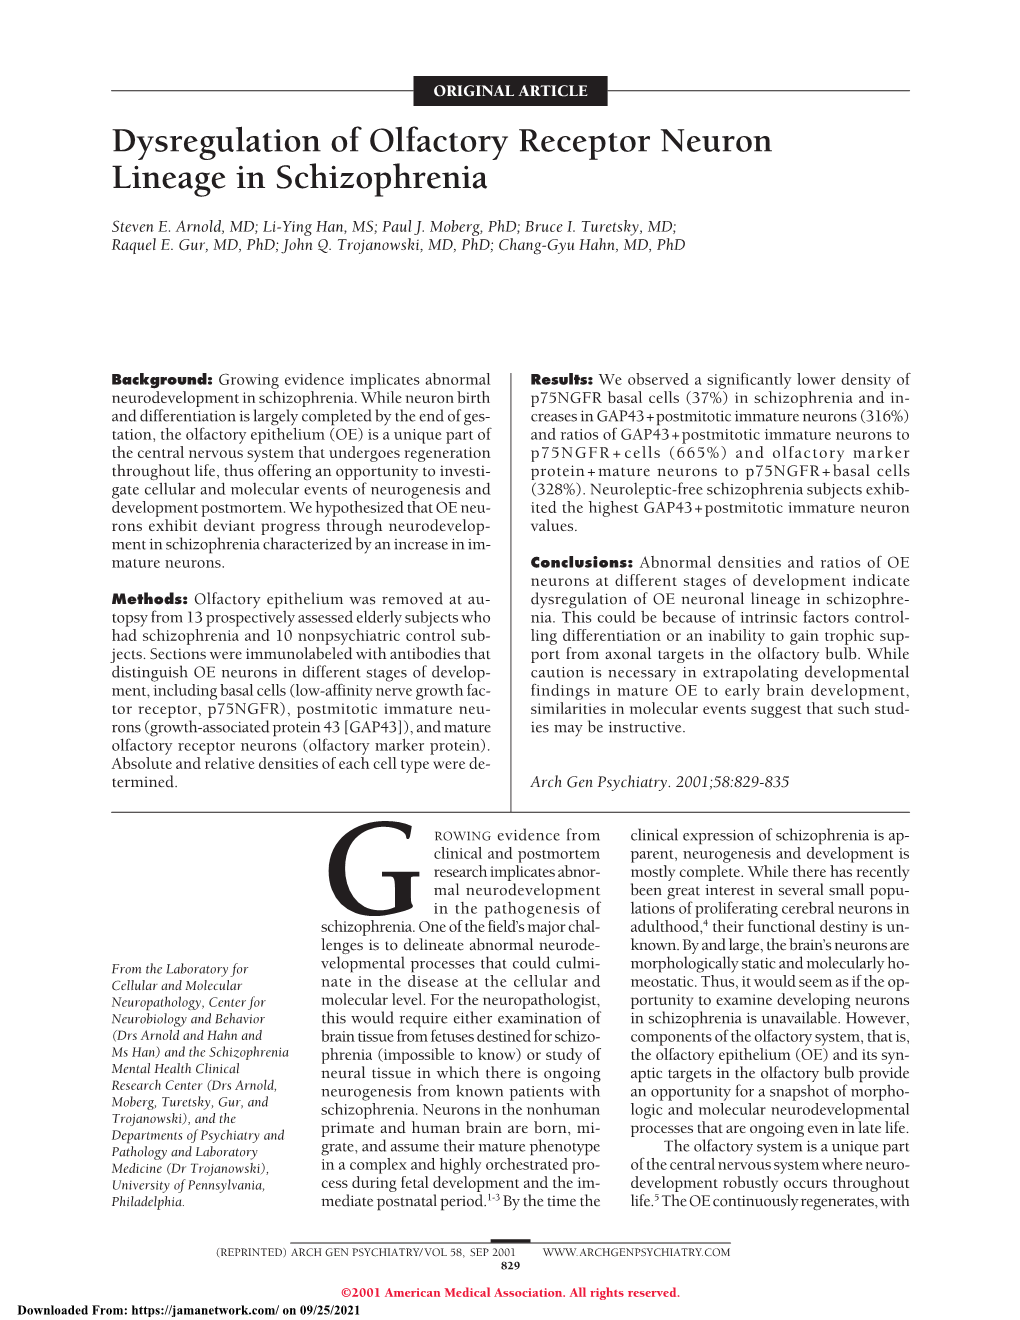 Dysregulation of Olfactory Receptor Neuron Lineage in Schizophrenia